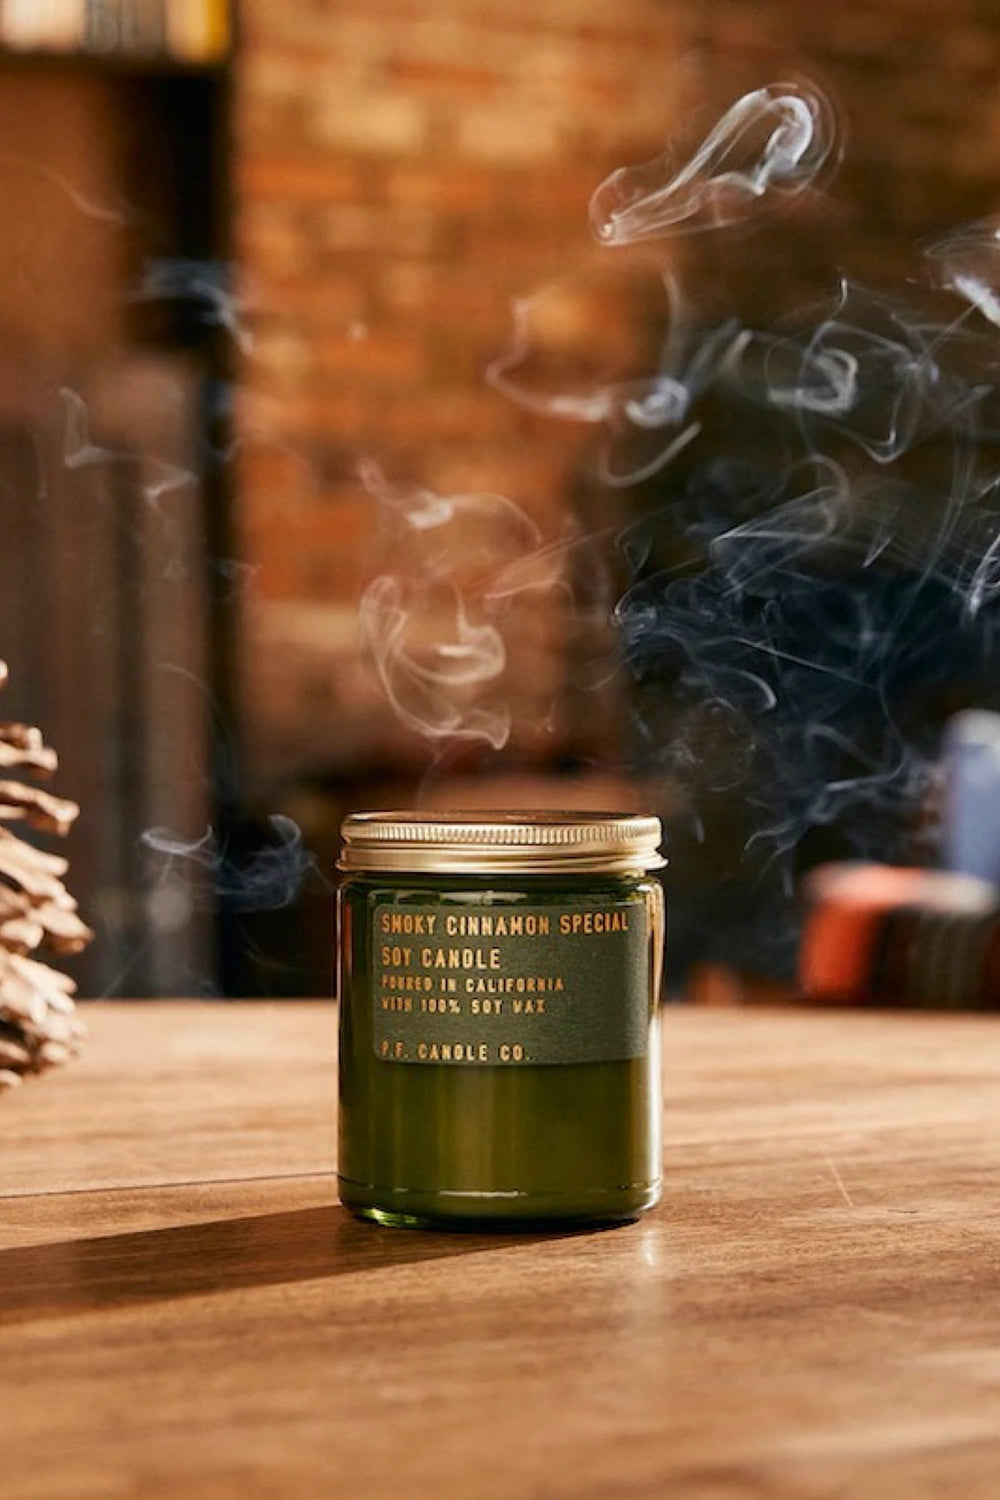 Smoky Cinnamon Special Candle